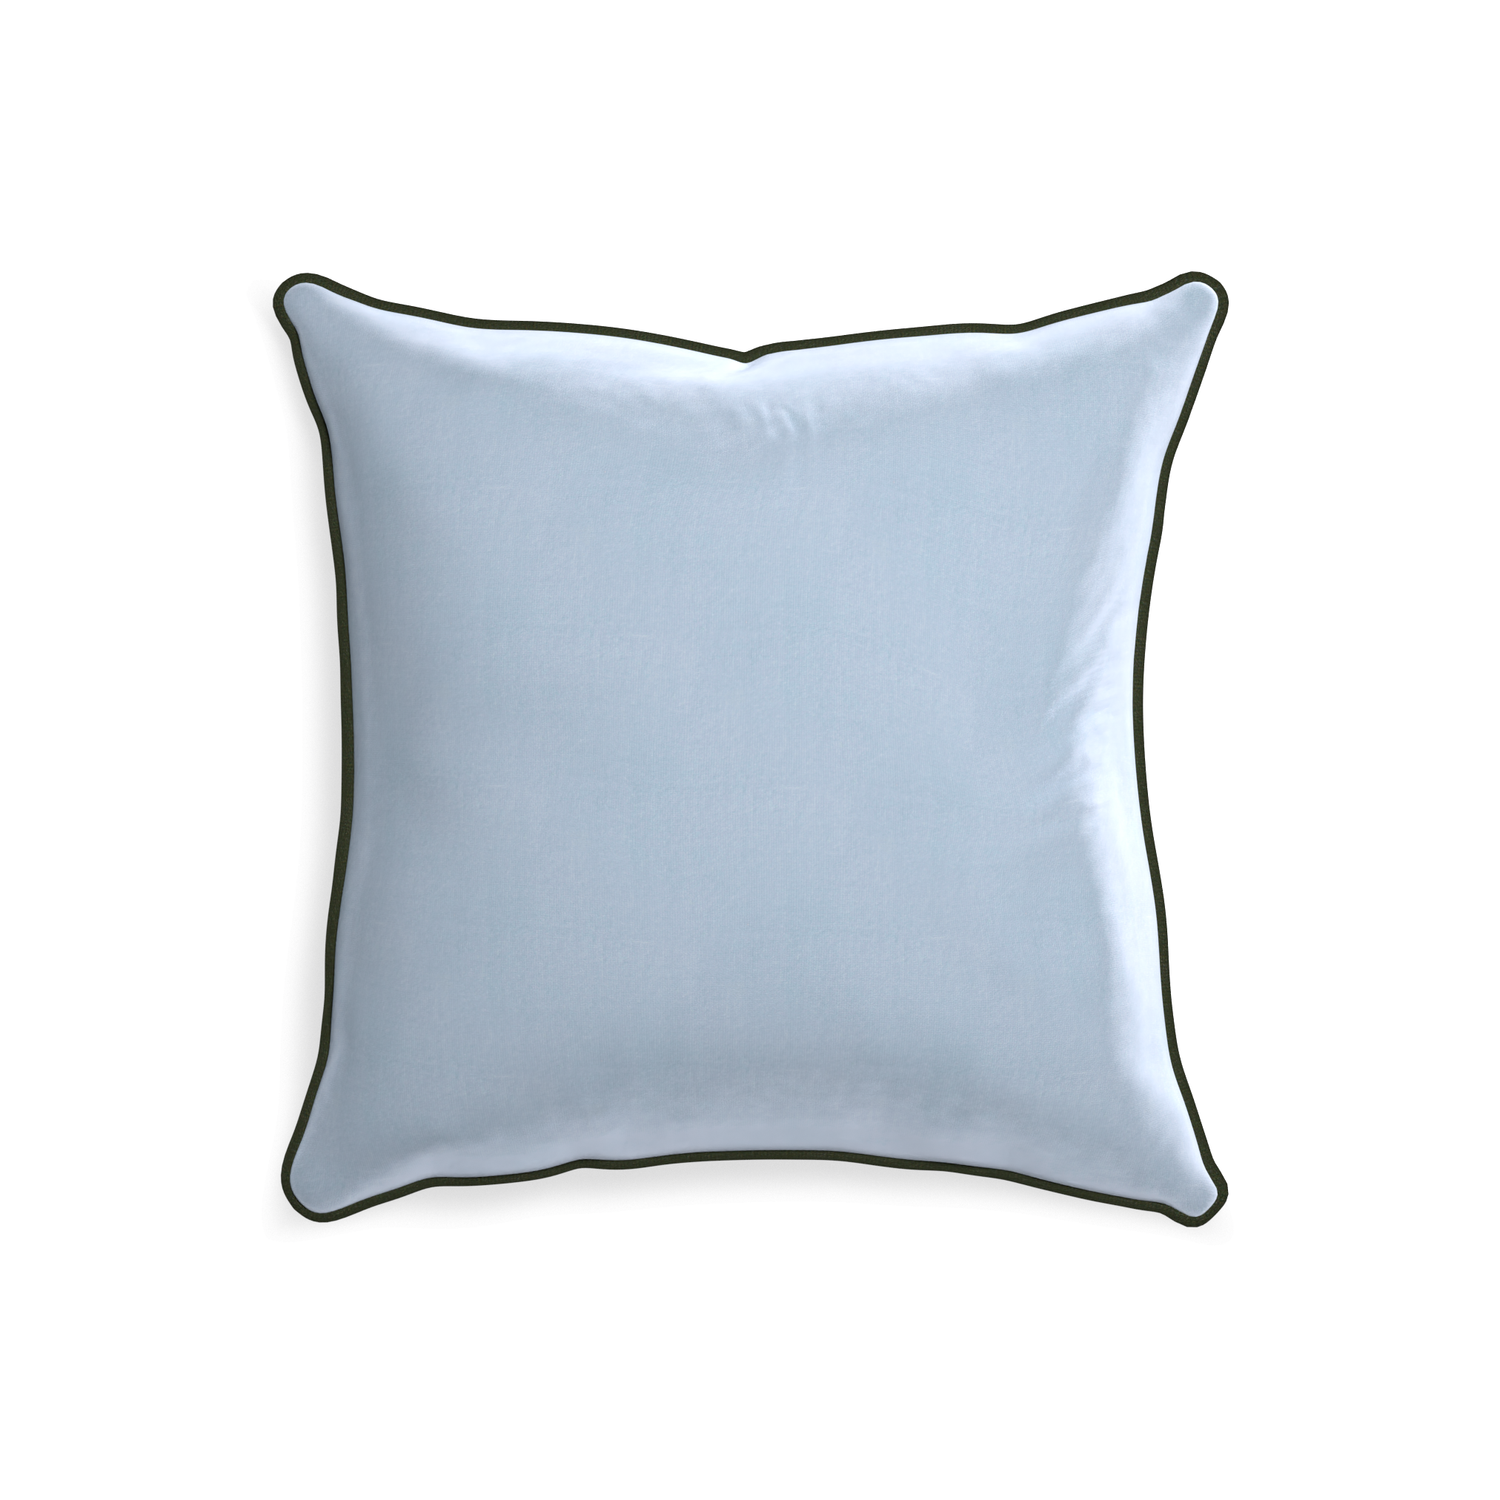 20-square sky velvet custom pillow with f piping on white background